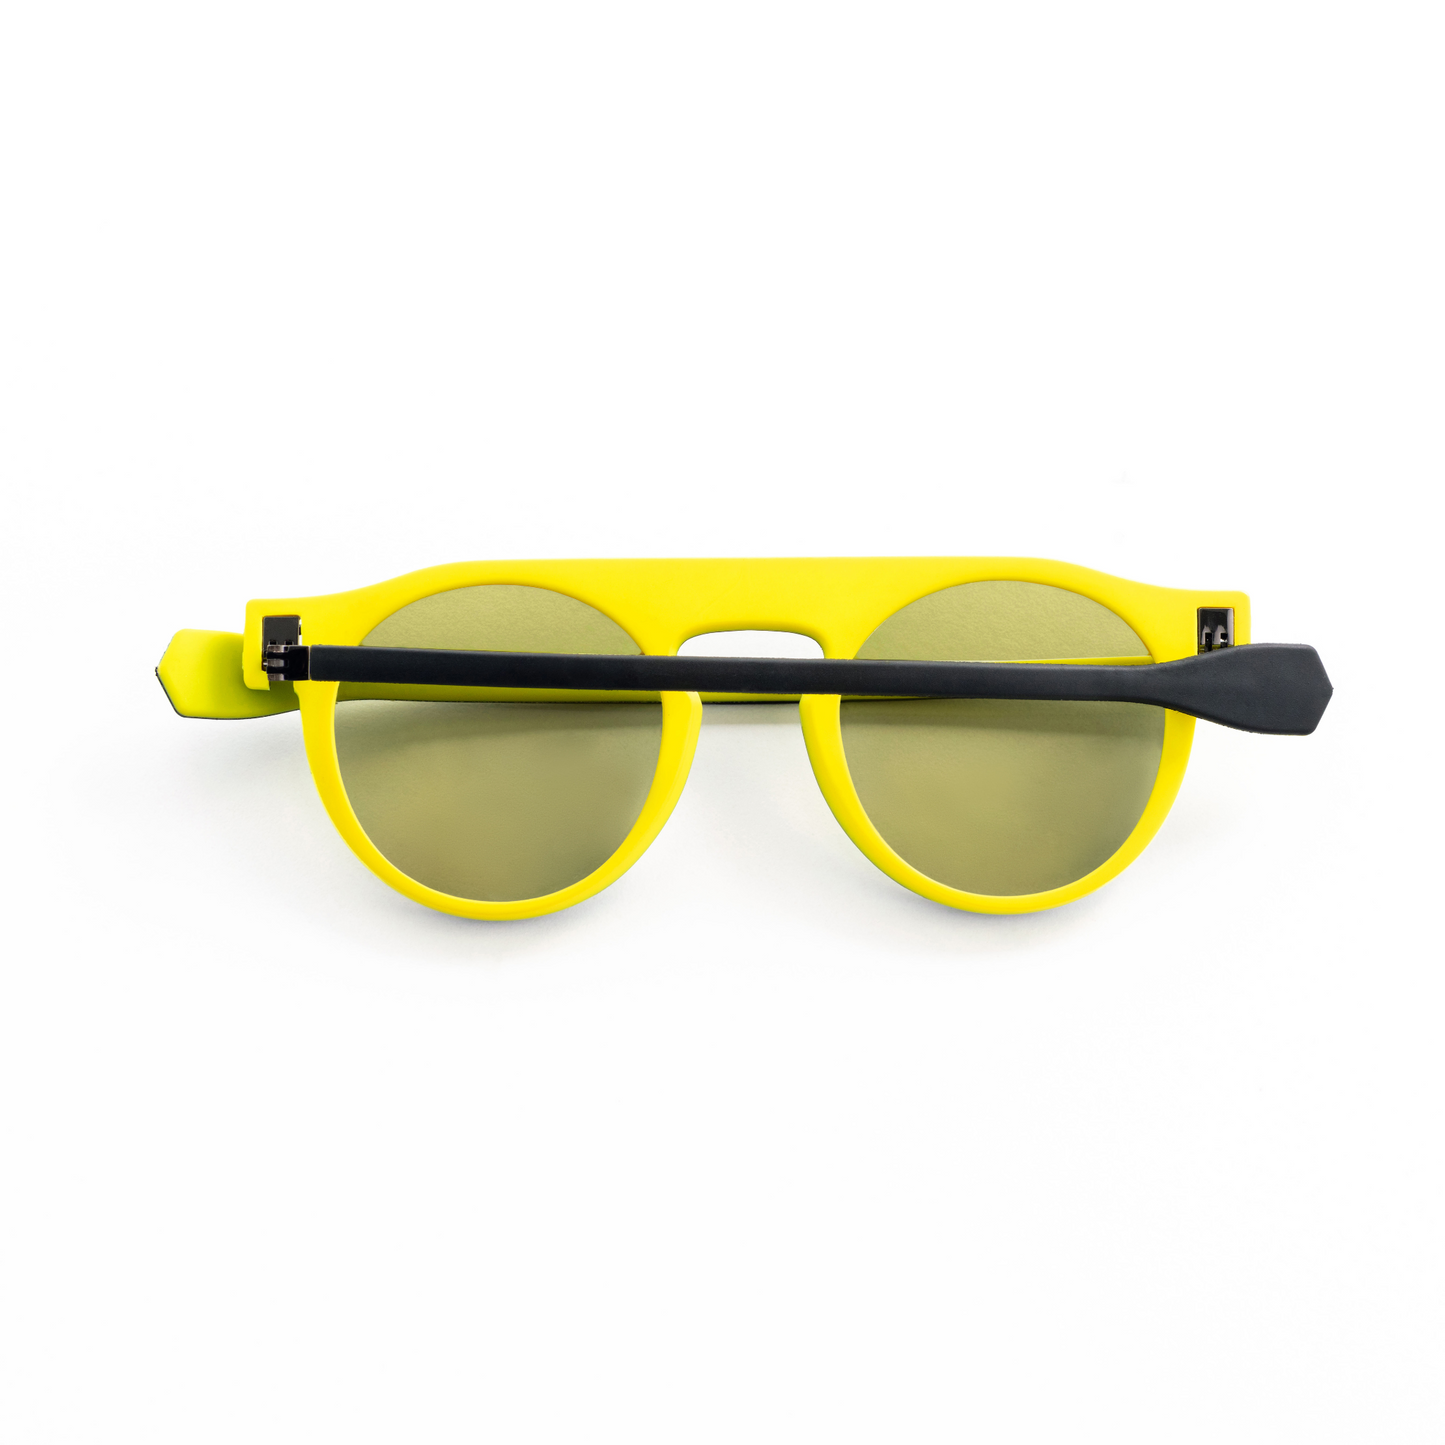 Reverso sunglasses black & yellow reversible & ultra light back view